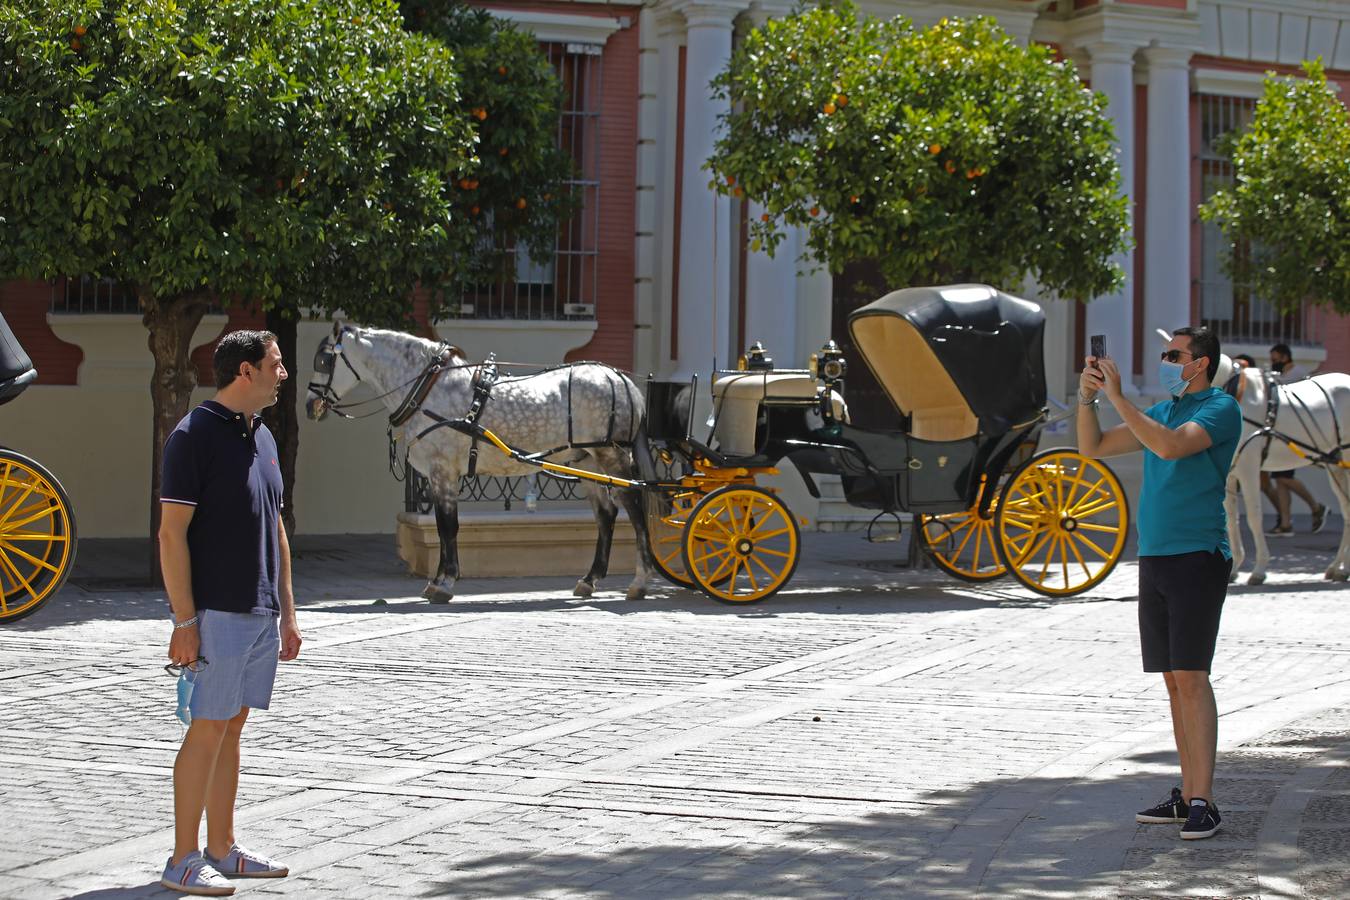 Los coches de caballos vuelven a las calles de Sevilla